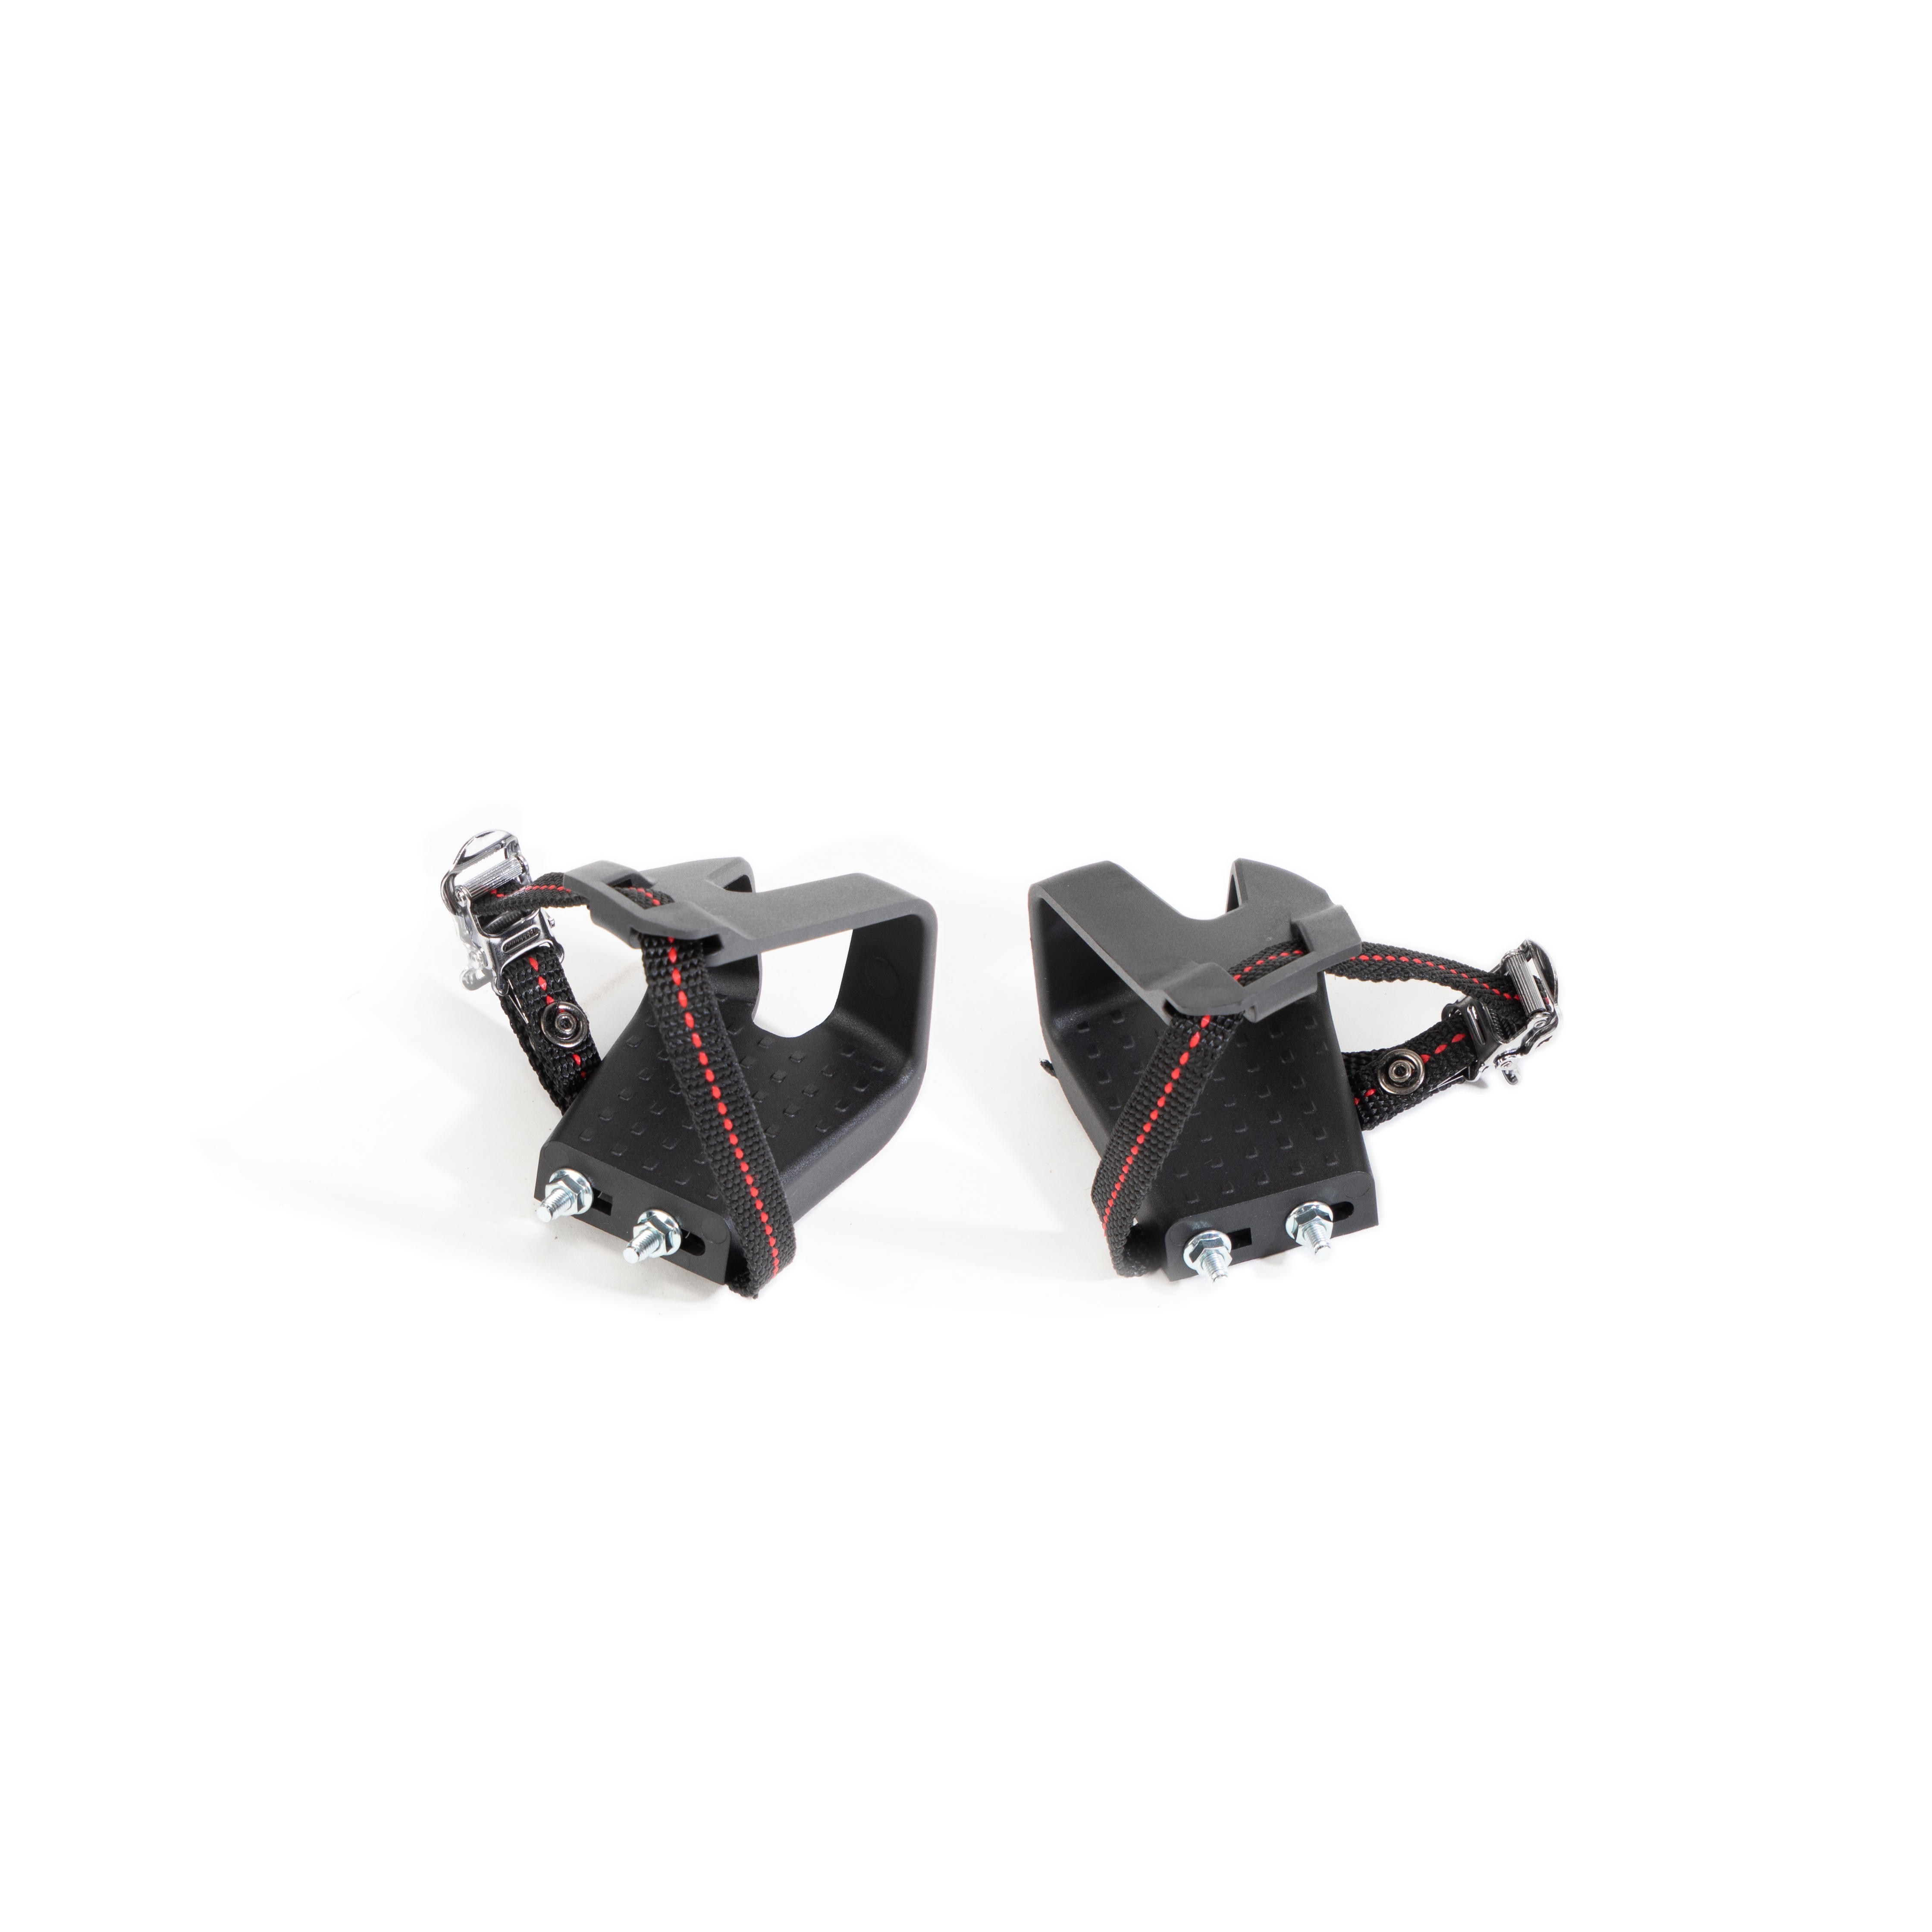 Universal bike toe clips - ROCKRIDER